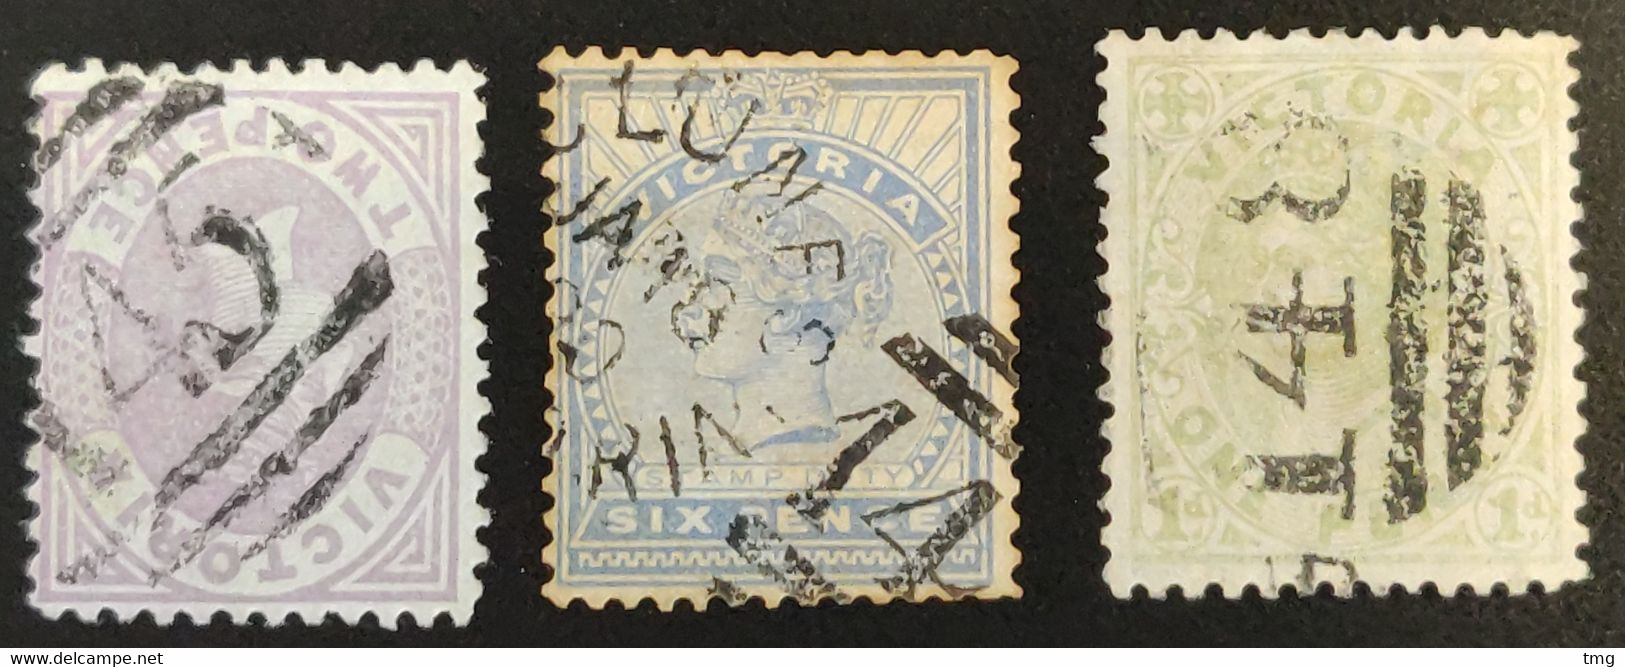 J104 – Victoria (°) Obl, Victoria Numerals, Num 145, 147, 148, Chewton, Clunes, Emerald Hill - South Melbourne - Used Stamps